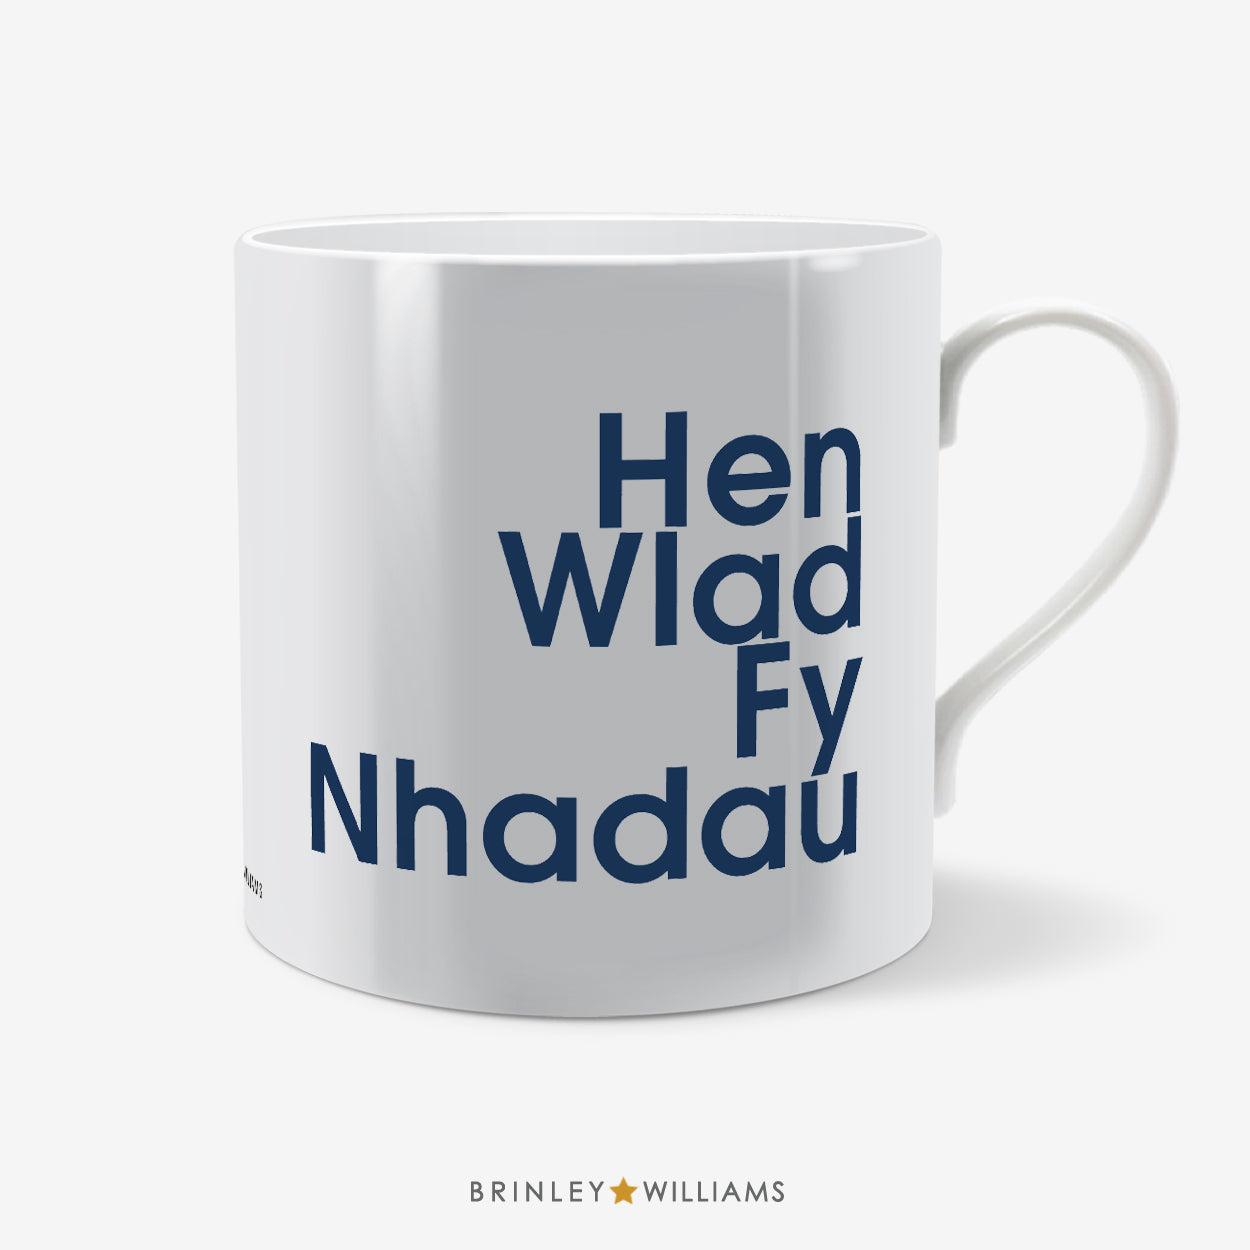 Hen Wlad Fy Nhadau Welsh Mug - Navy